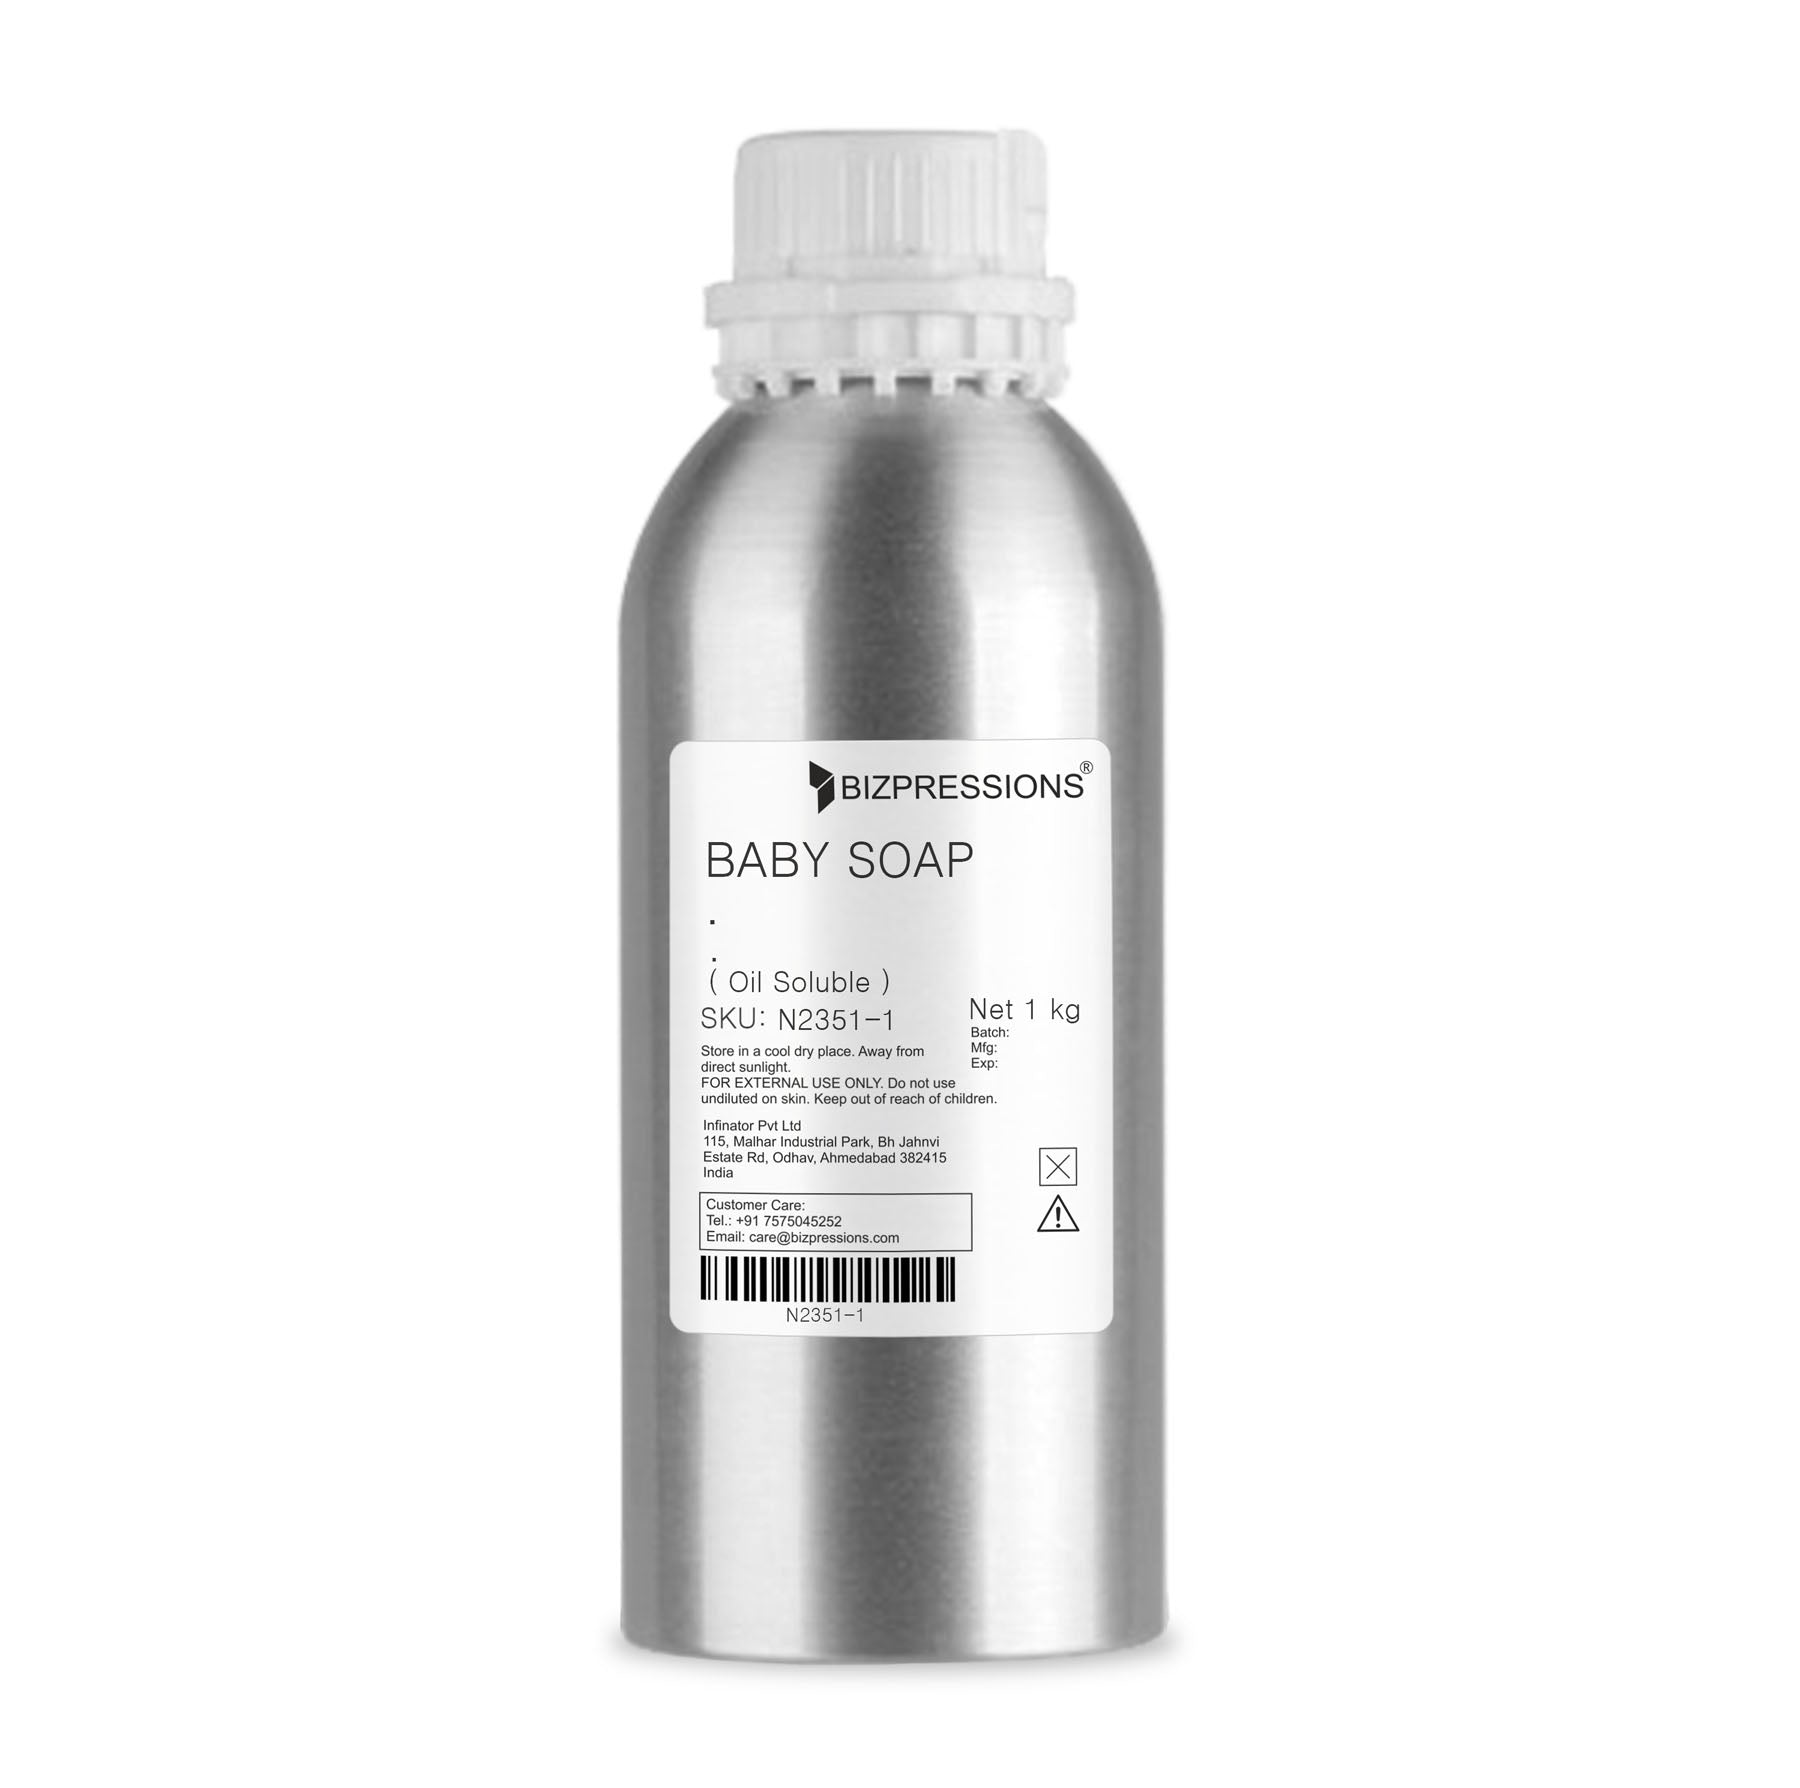 BABY SOAP - Fragrance ( Oil Soluble ) - 1 kg